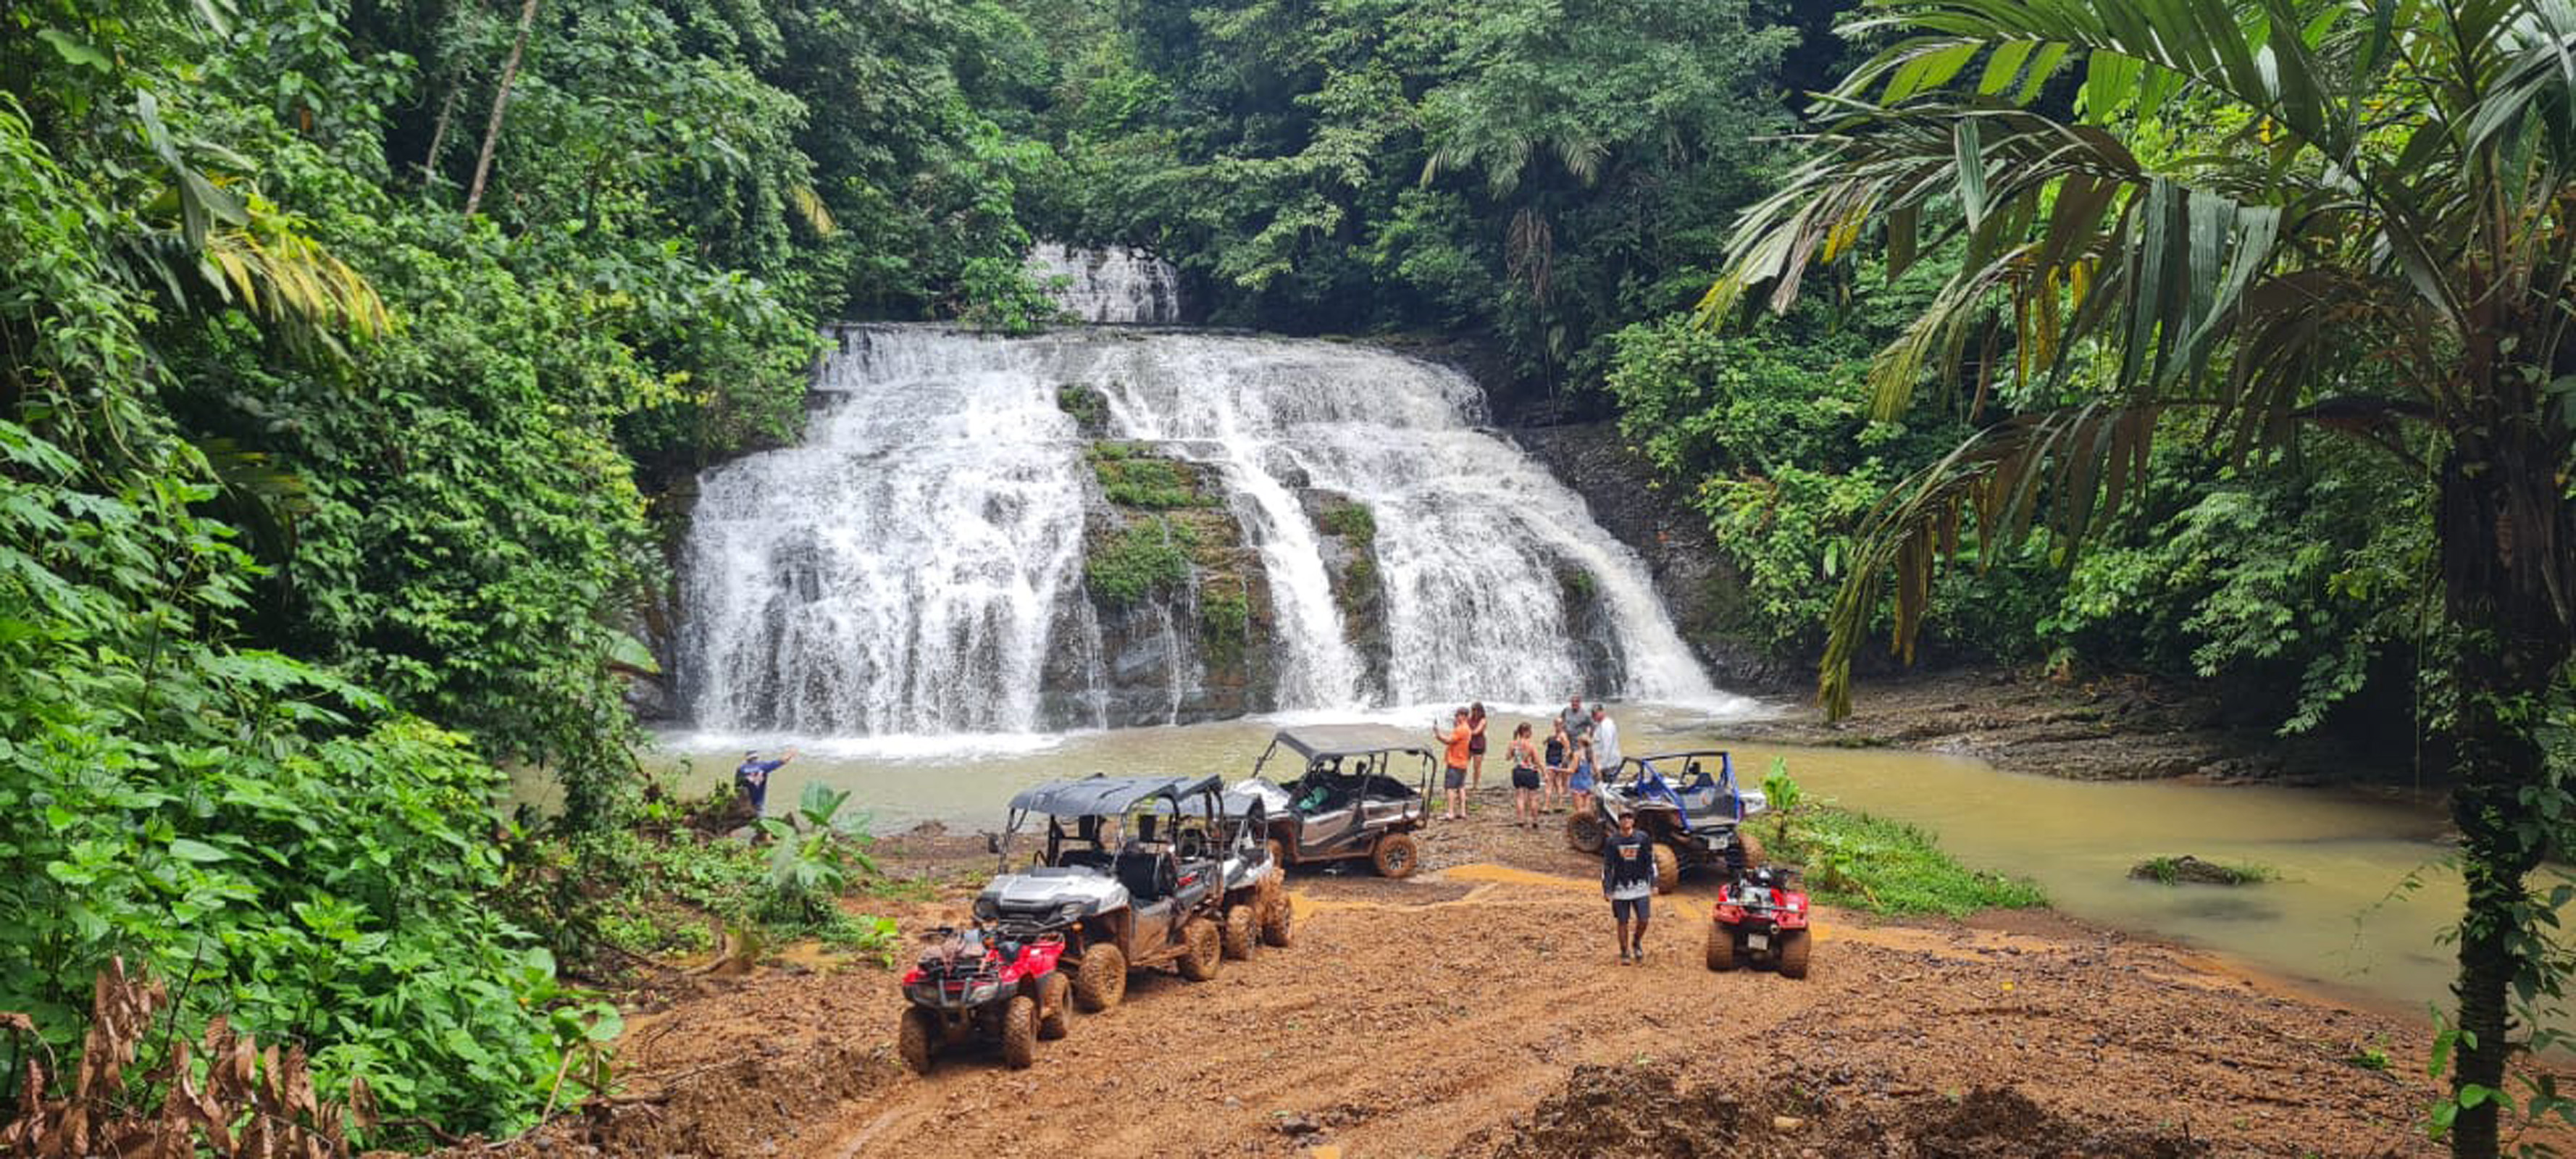 Private atv tour best waterfalls costa rica